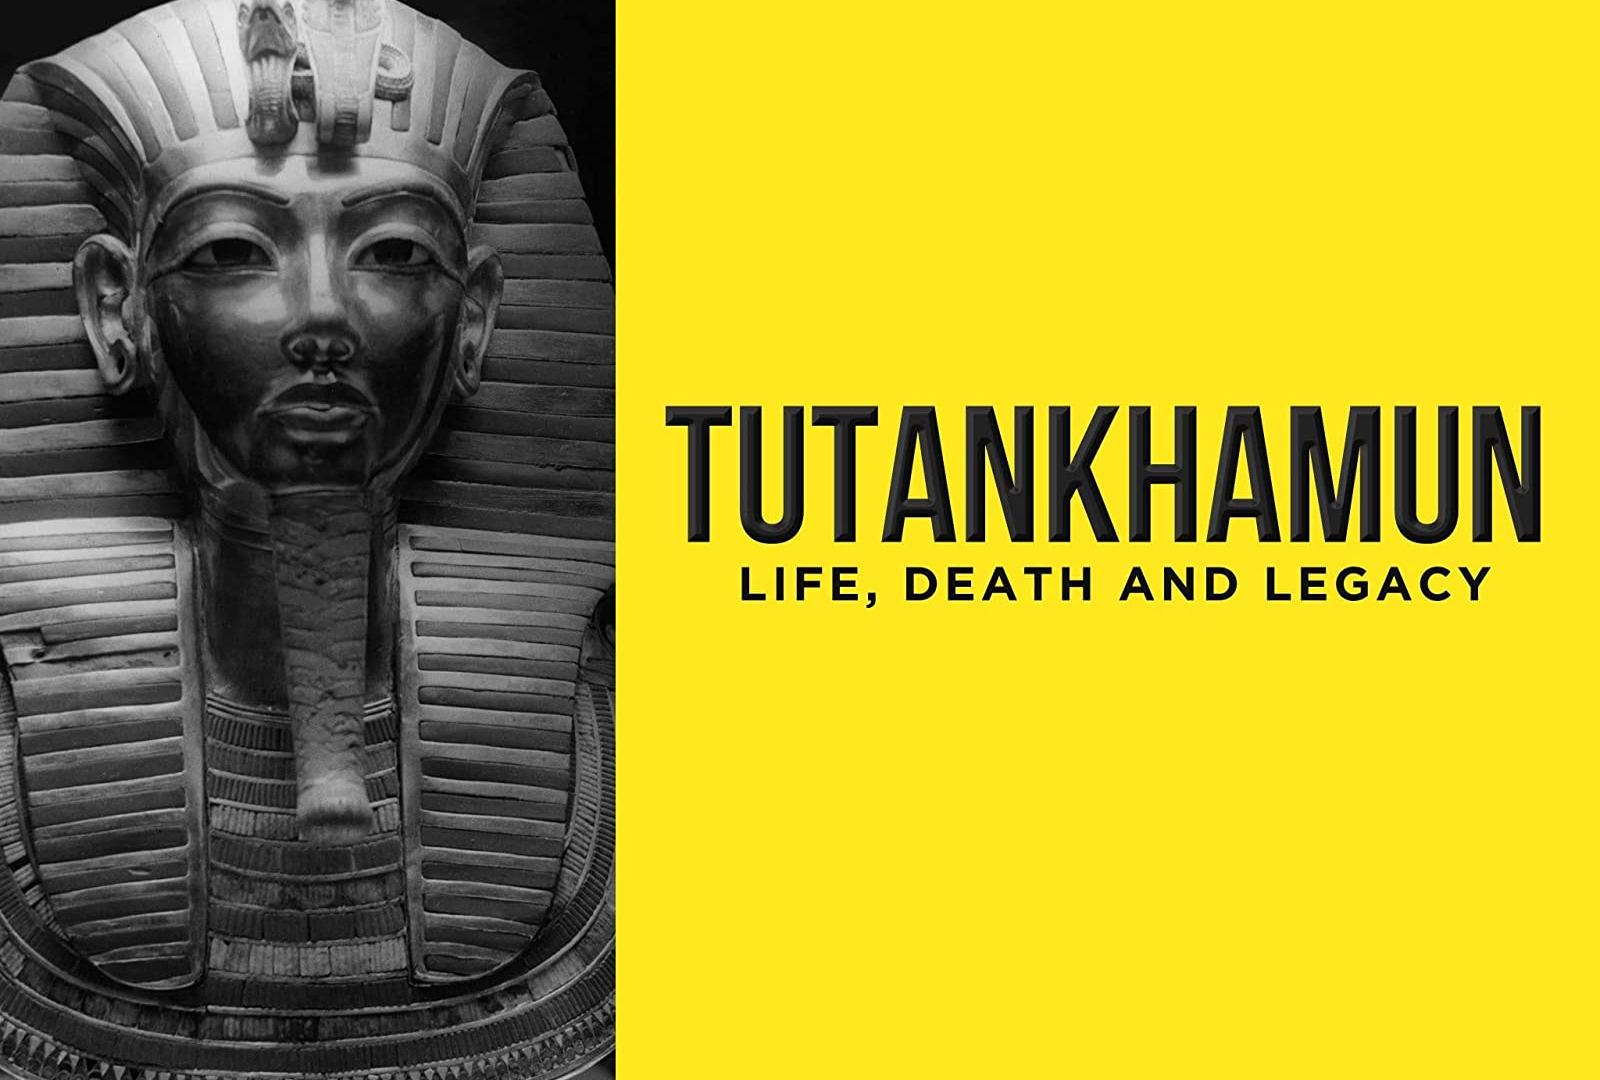 Show Tutankhamun with Dan Snow